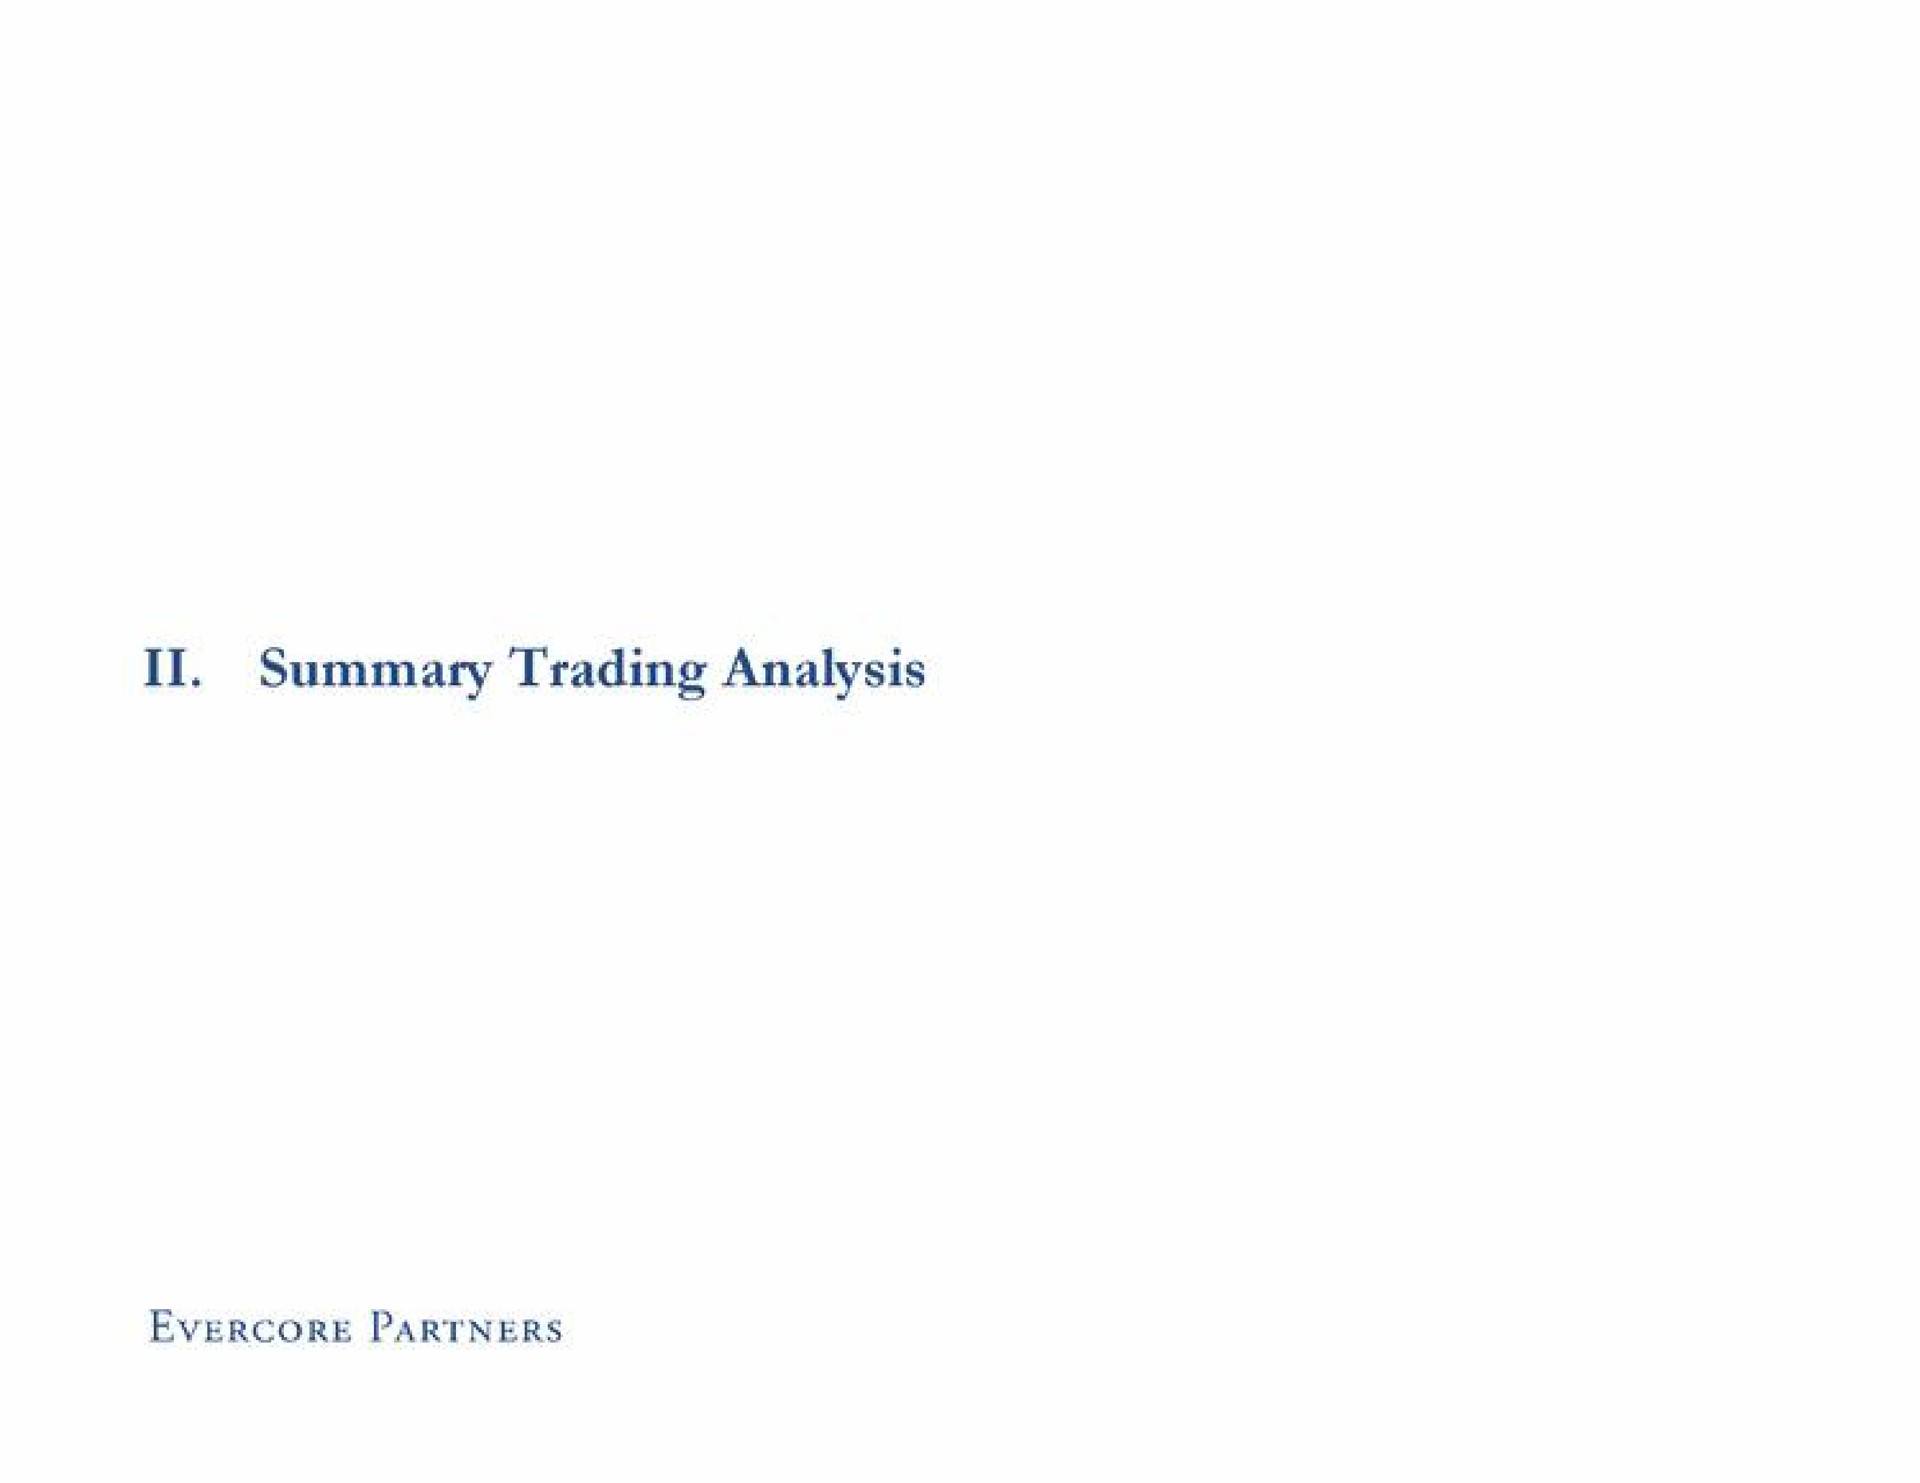 summary trading analysis partners | Evercore